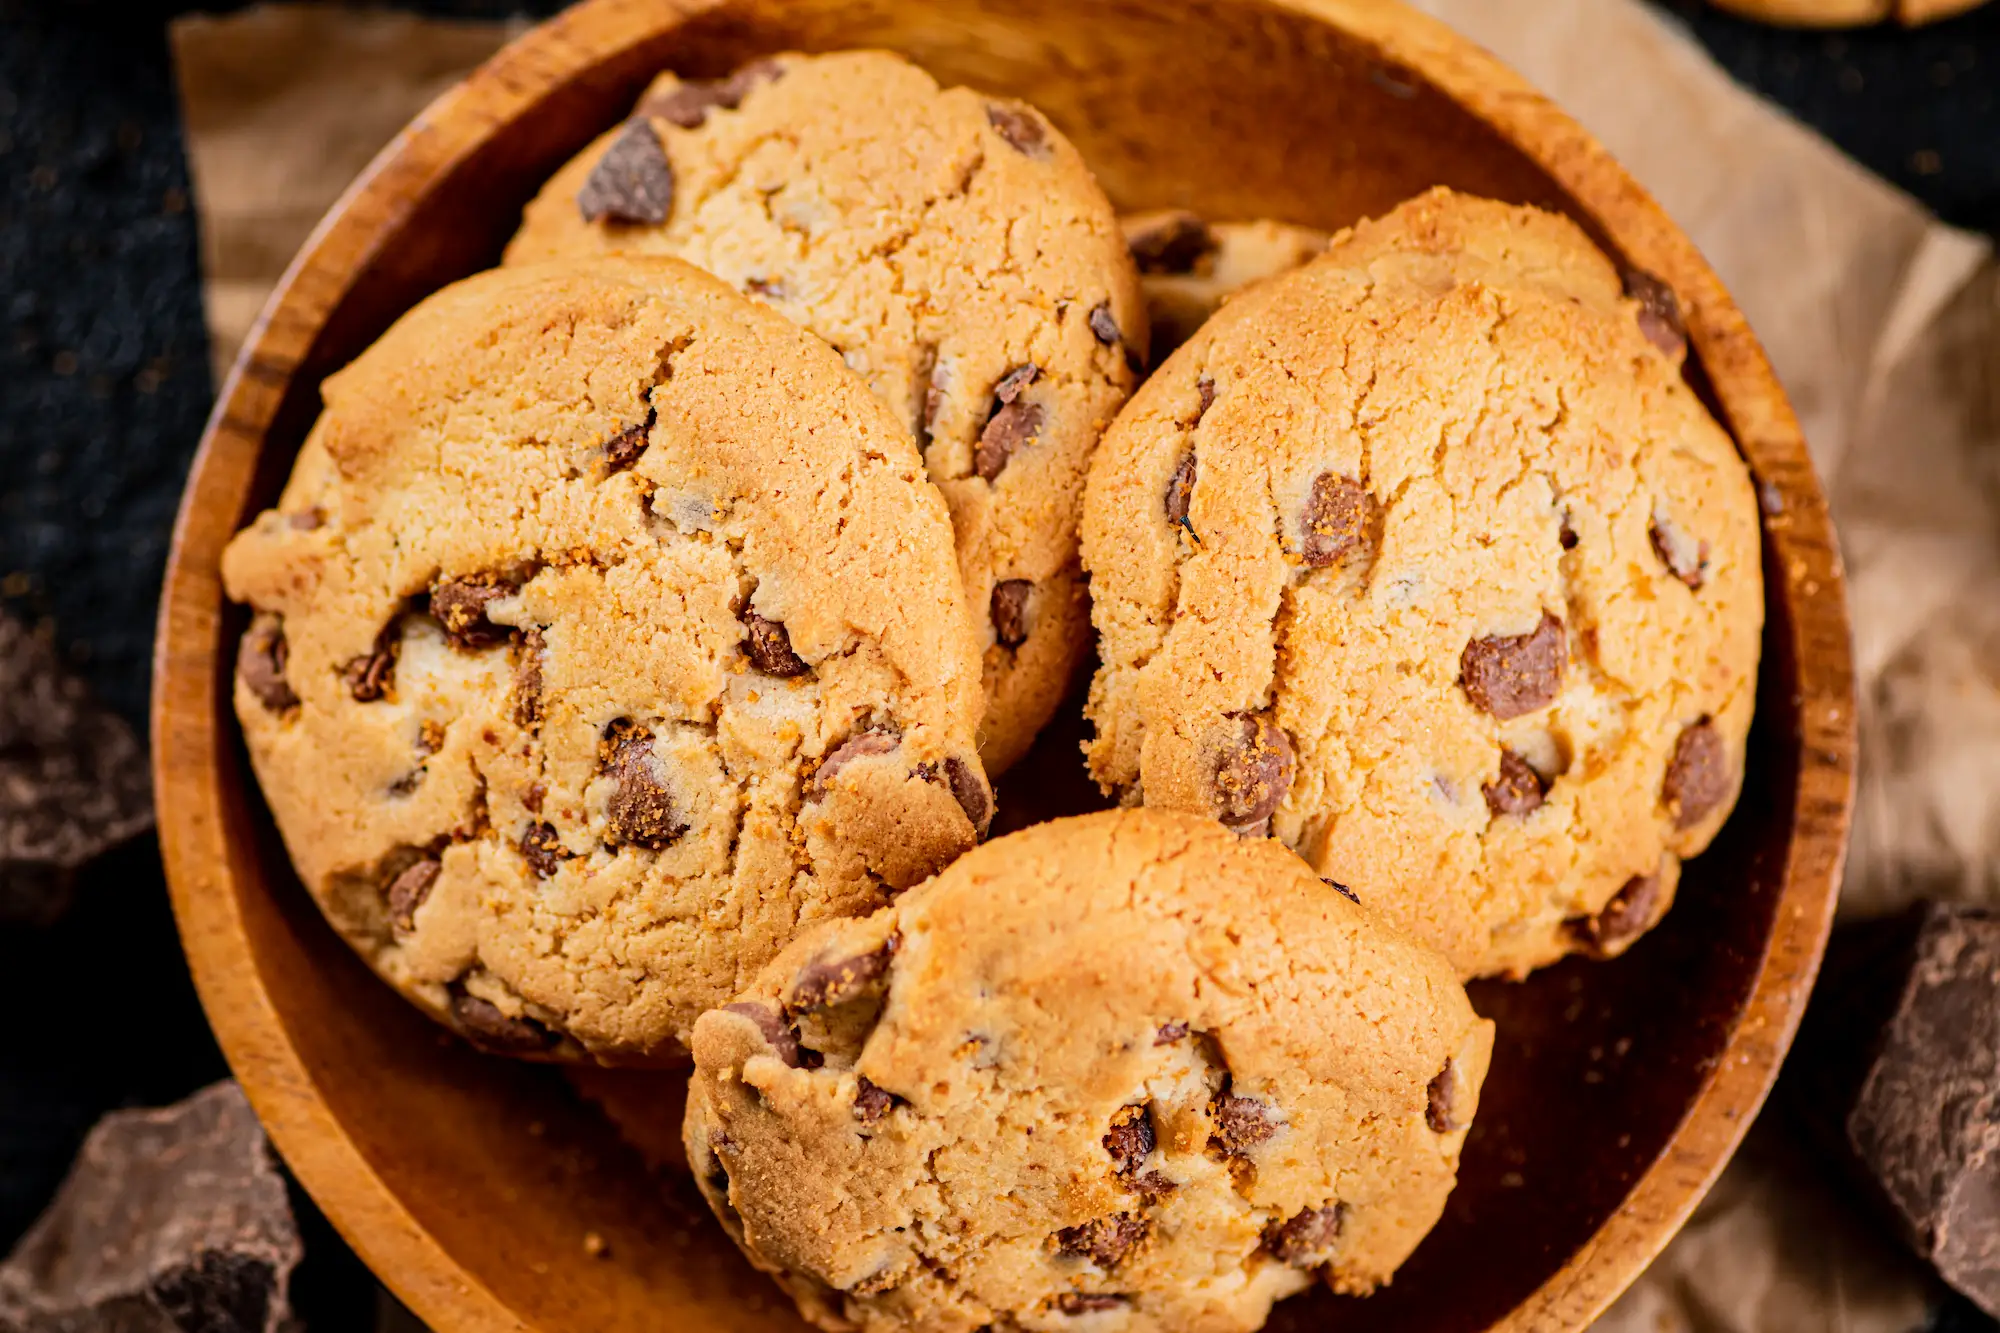 Homemade Cookies With Chocolate Against A Dark Ba 2022 01 12 00 57 40 Utc